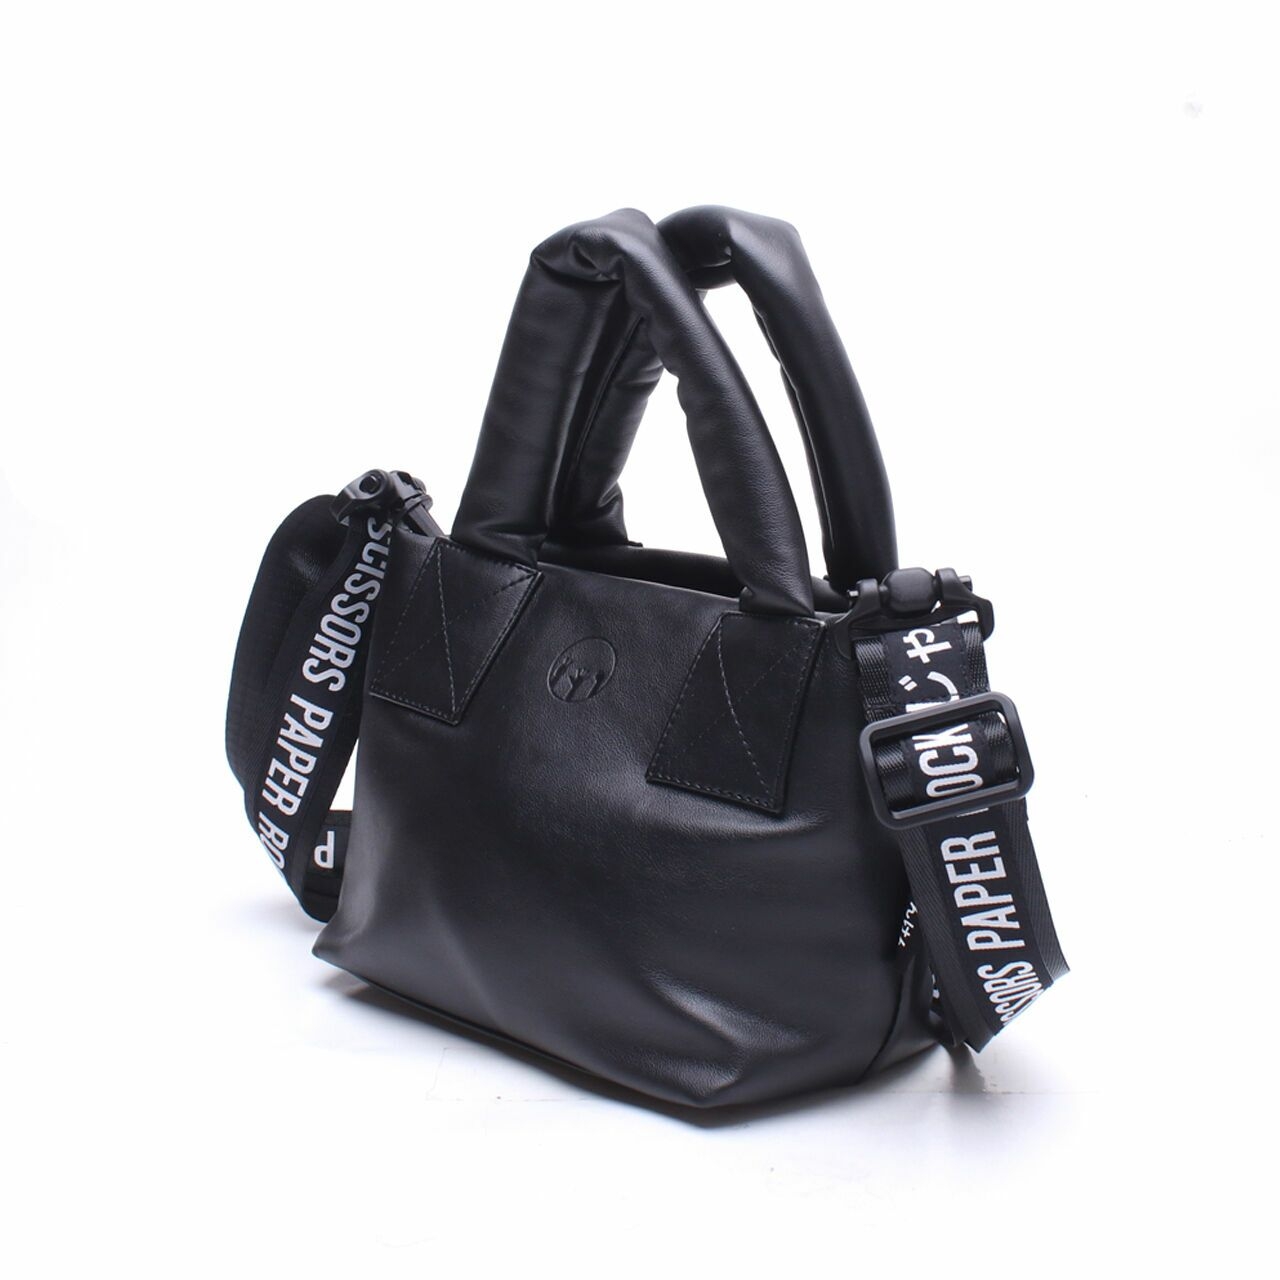 scipaprock Black Satchel Bag